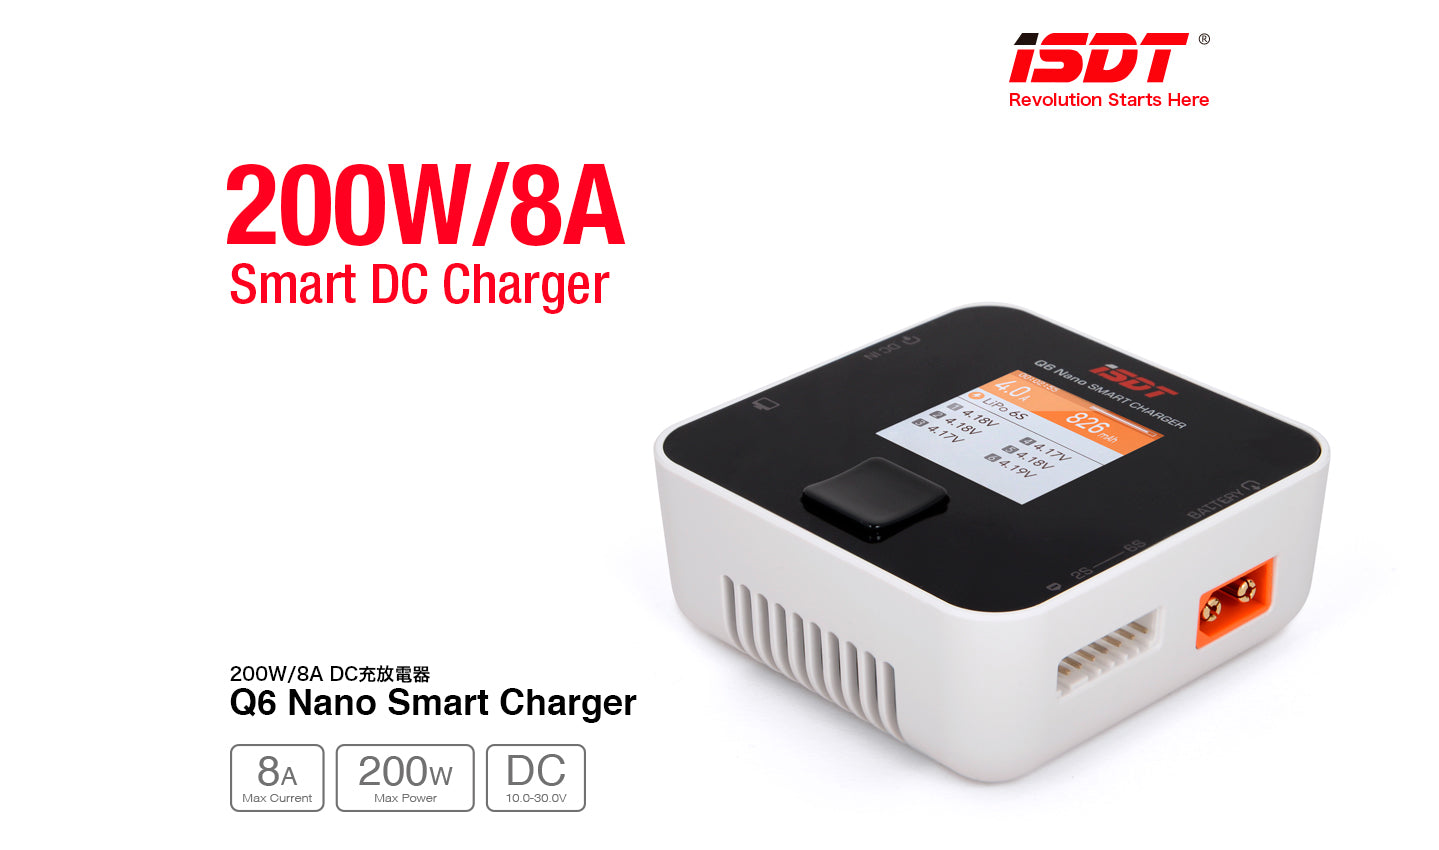 GDT114 Q6 Nano DC Smart Charger